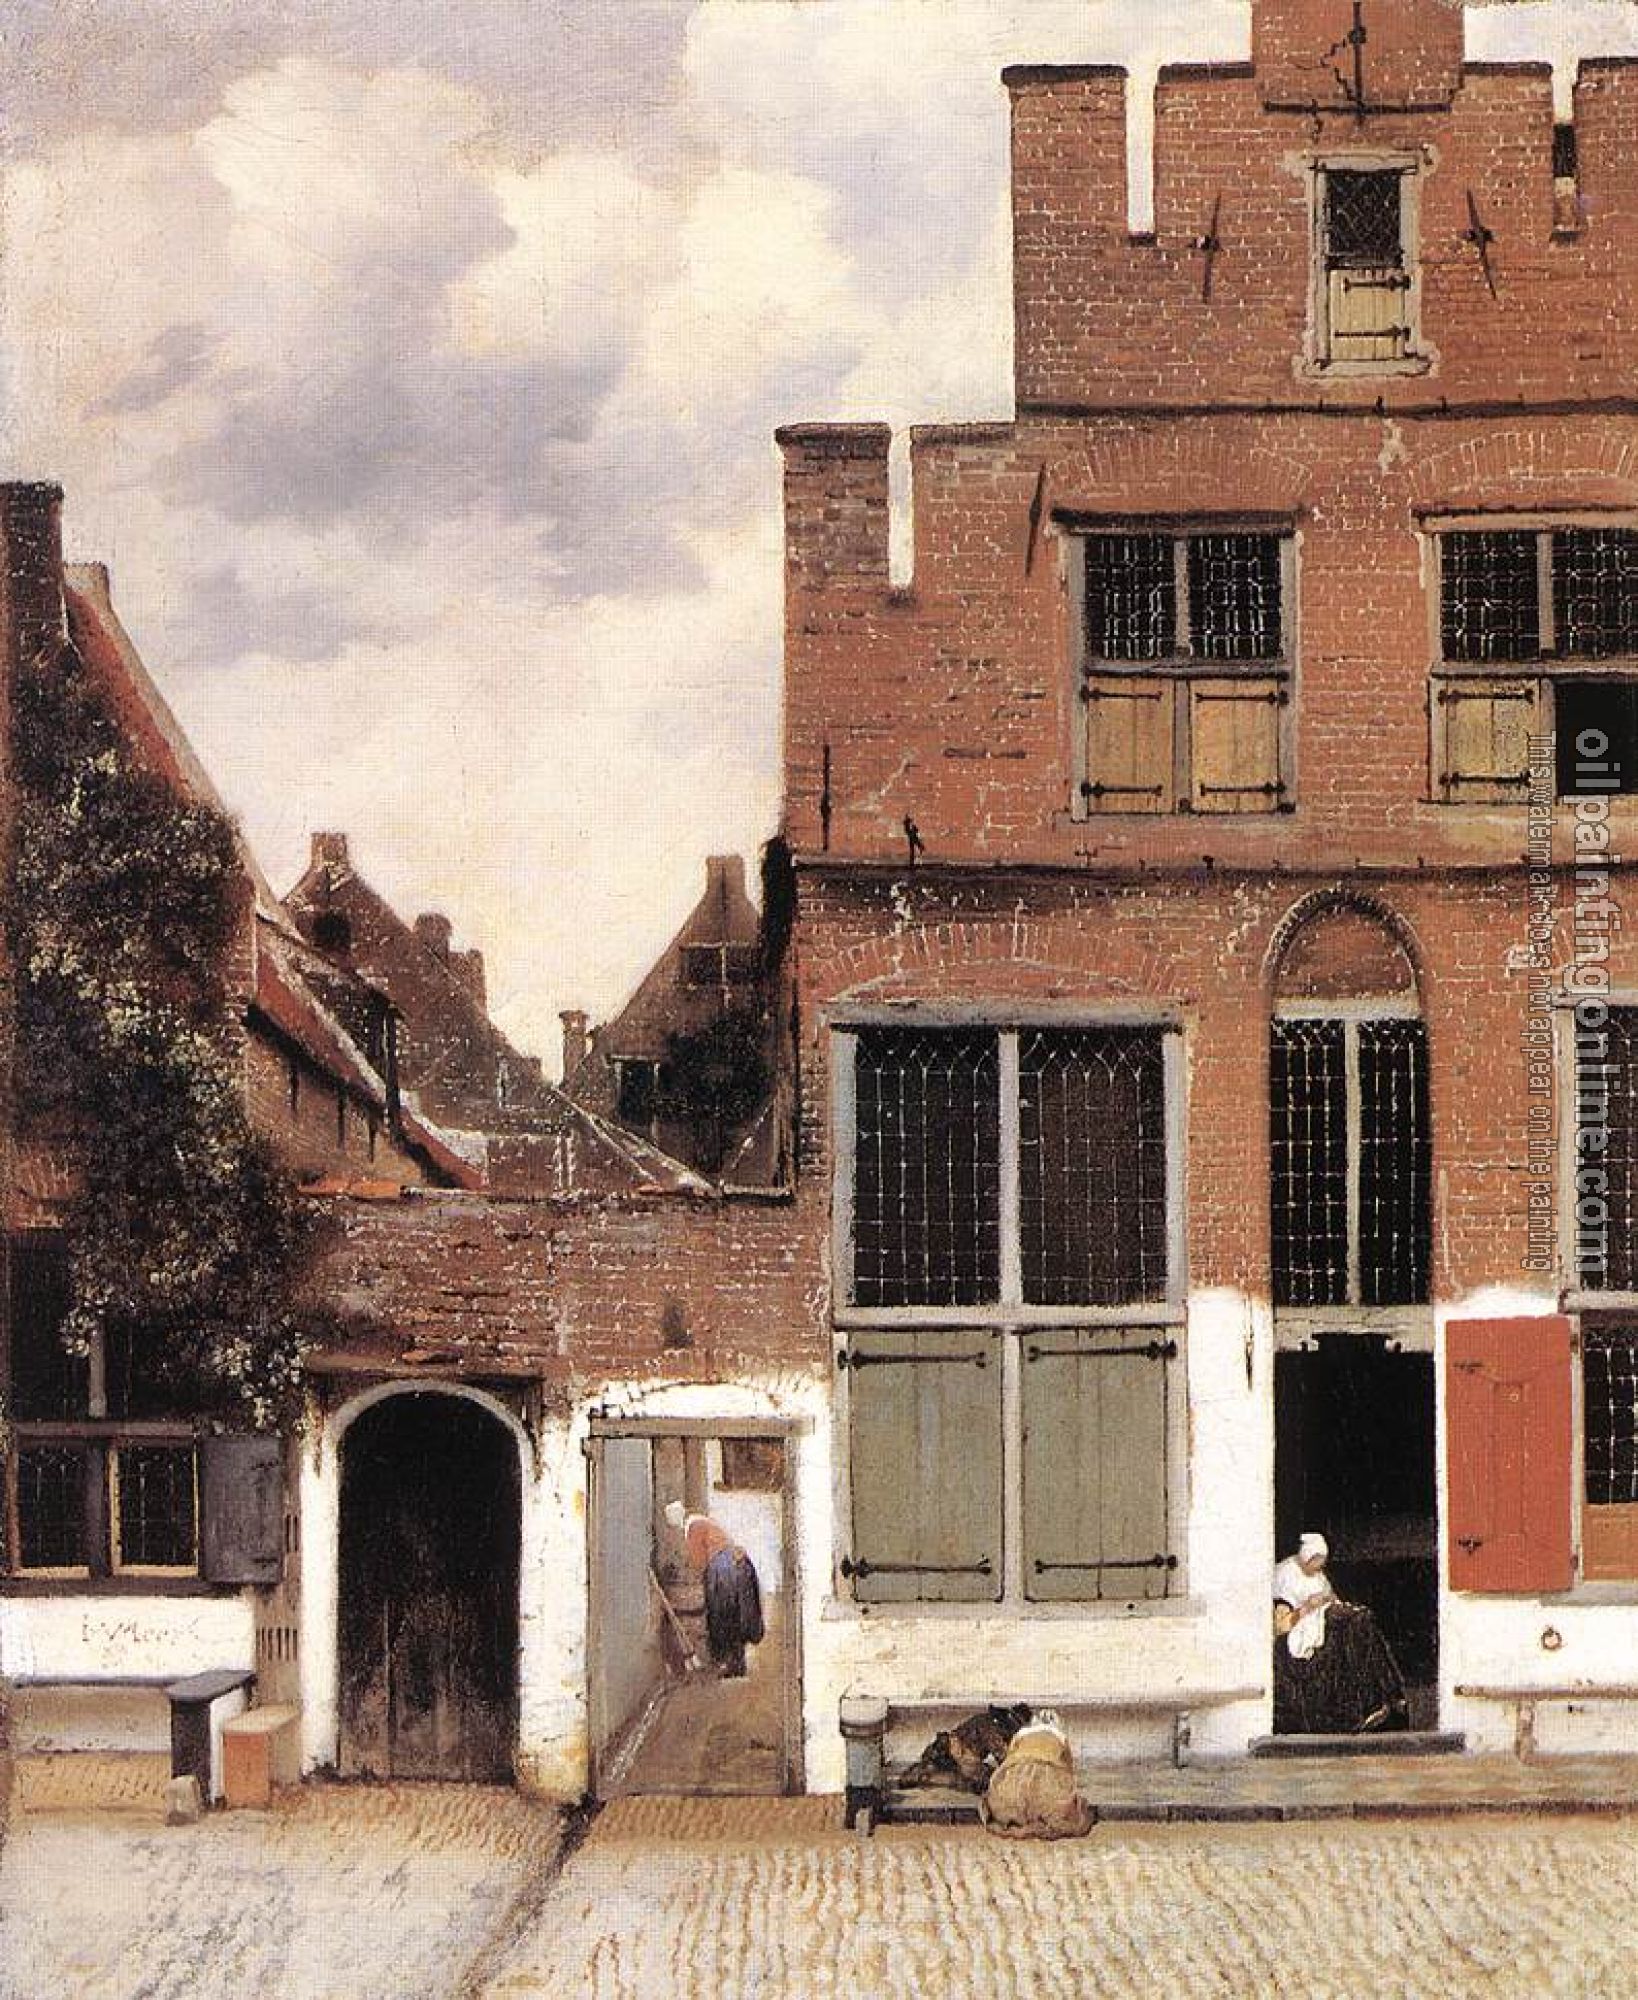 Vermeer, Jan - The Little Street